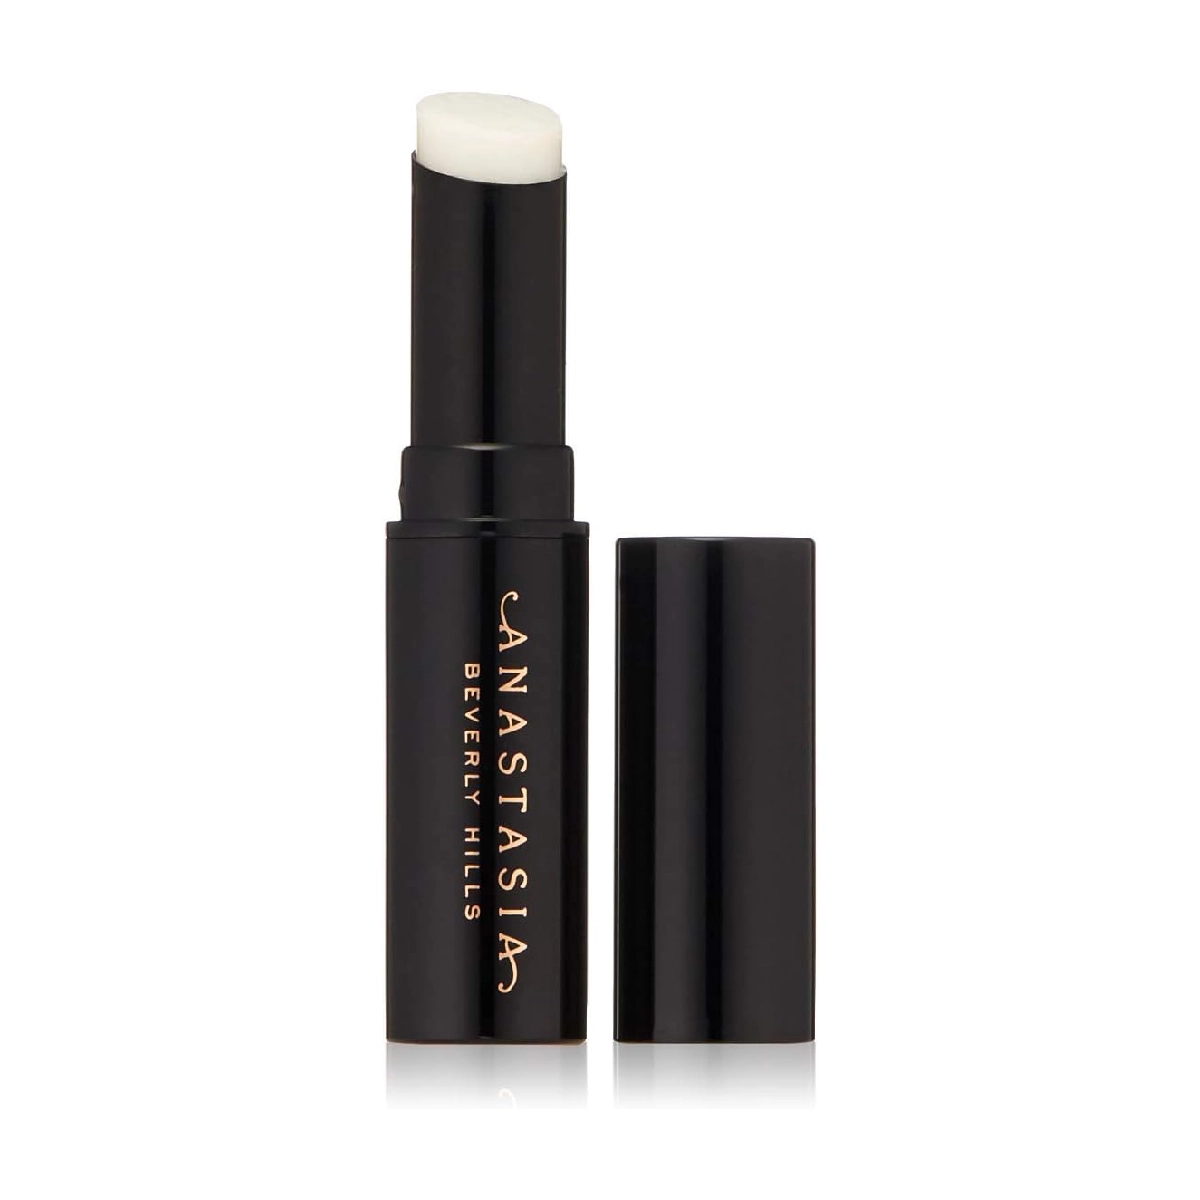 Anastasia Beverly Hills Lip Primer - a lip primer product on a white background.